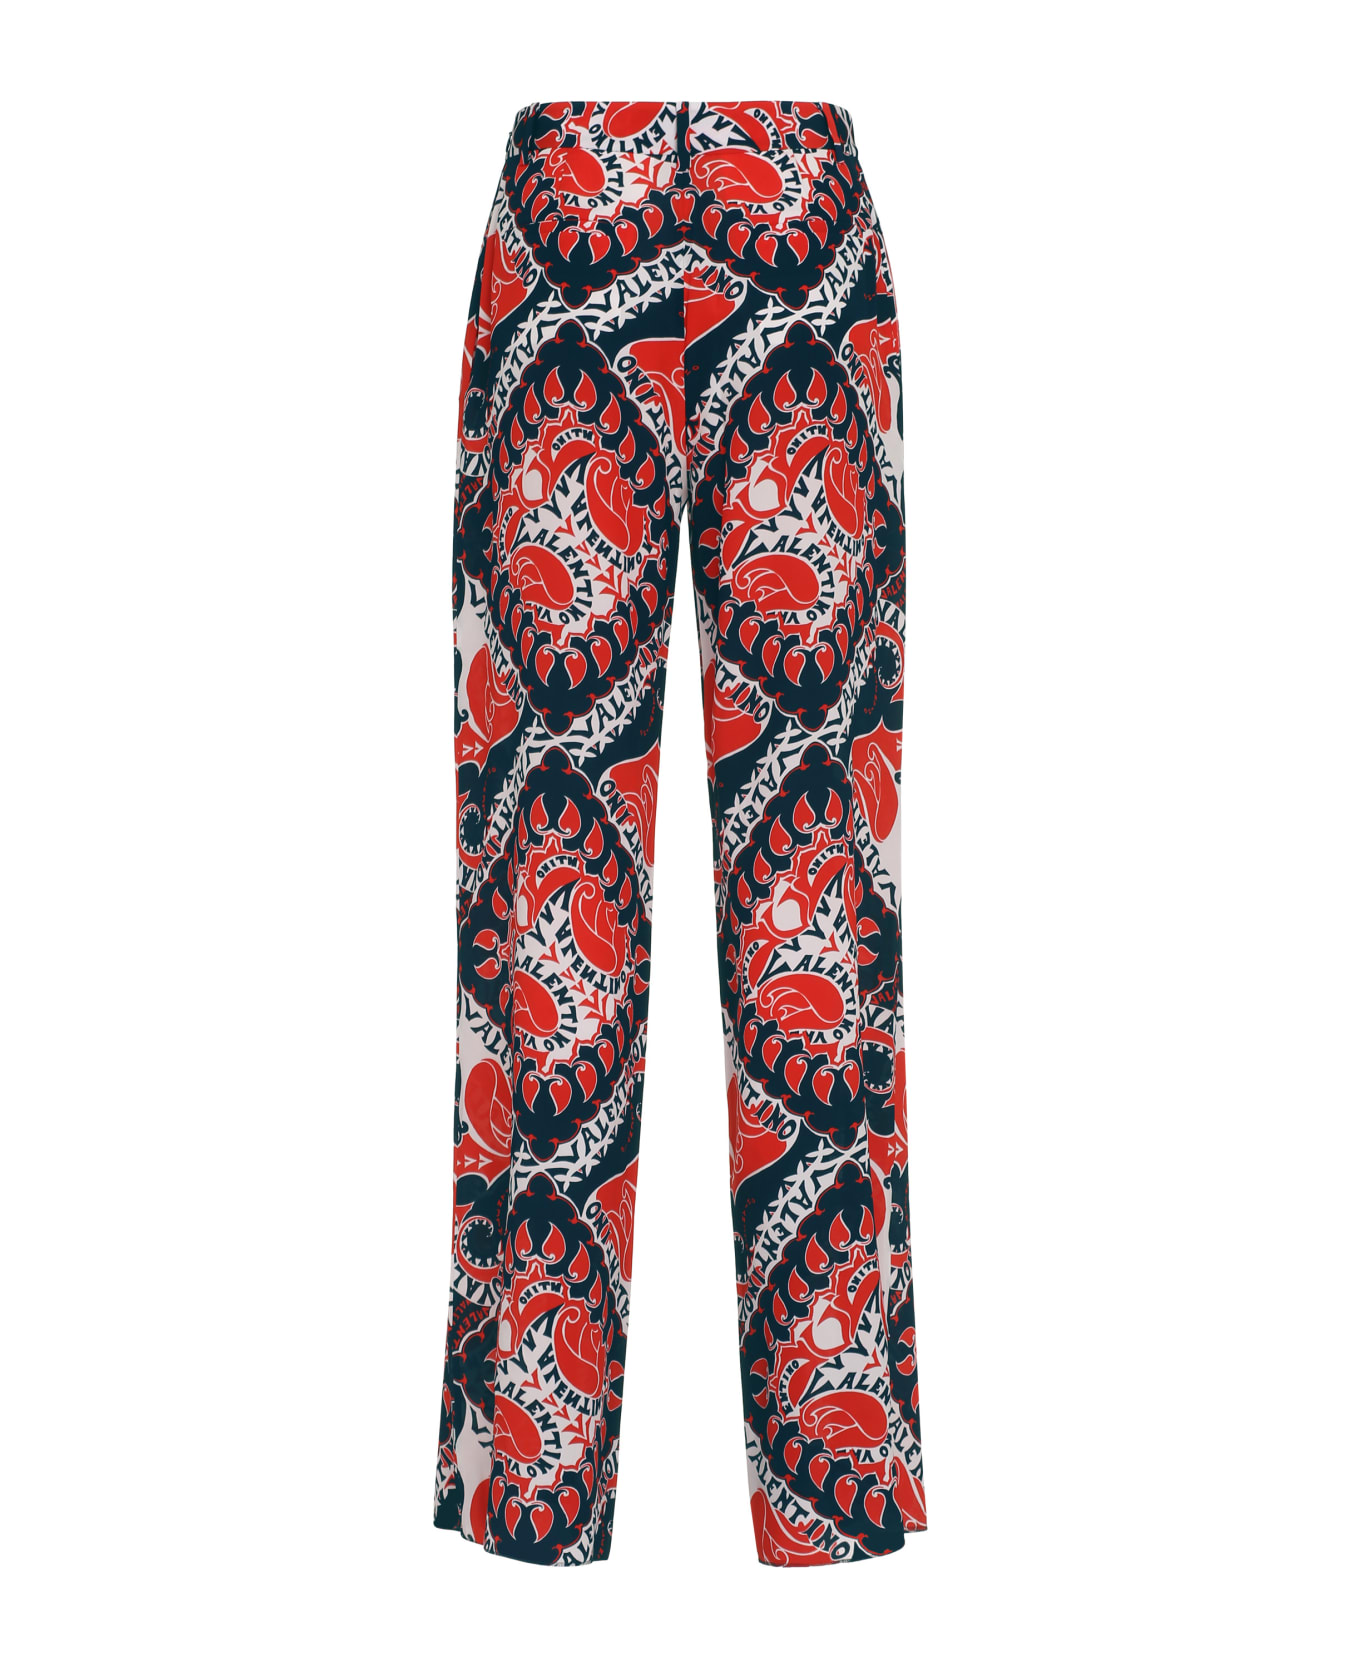 Valentino Printed Silk Pants - Multicolor